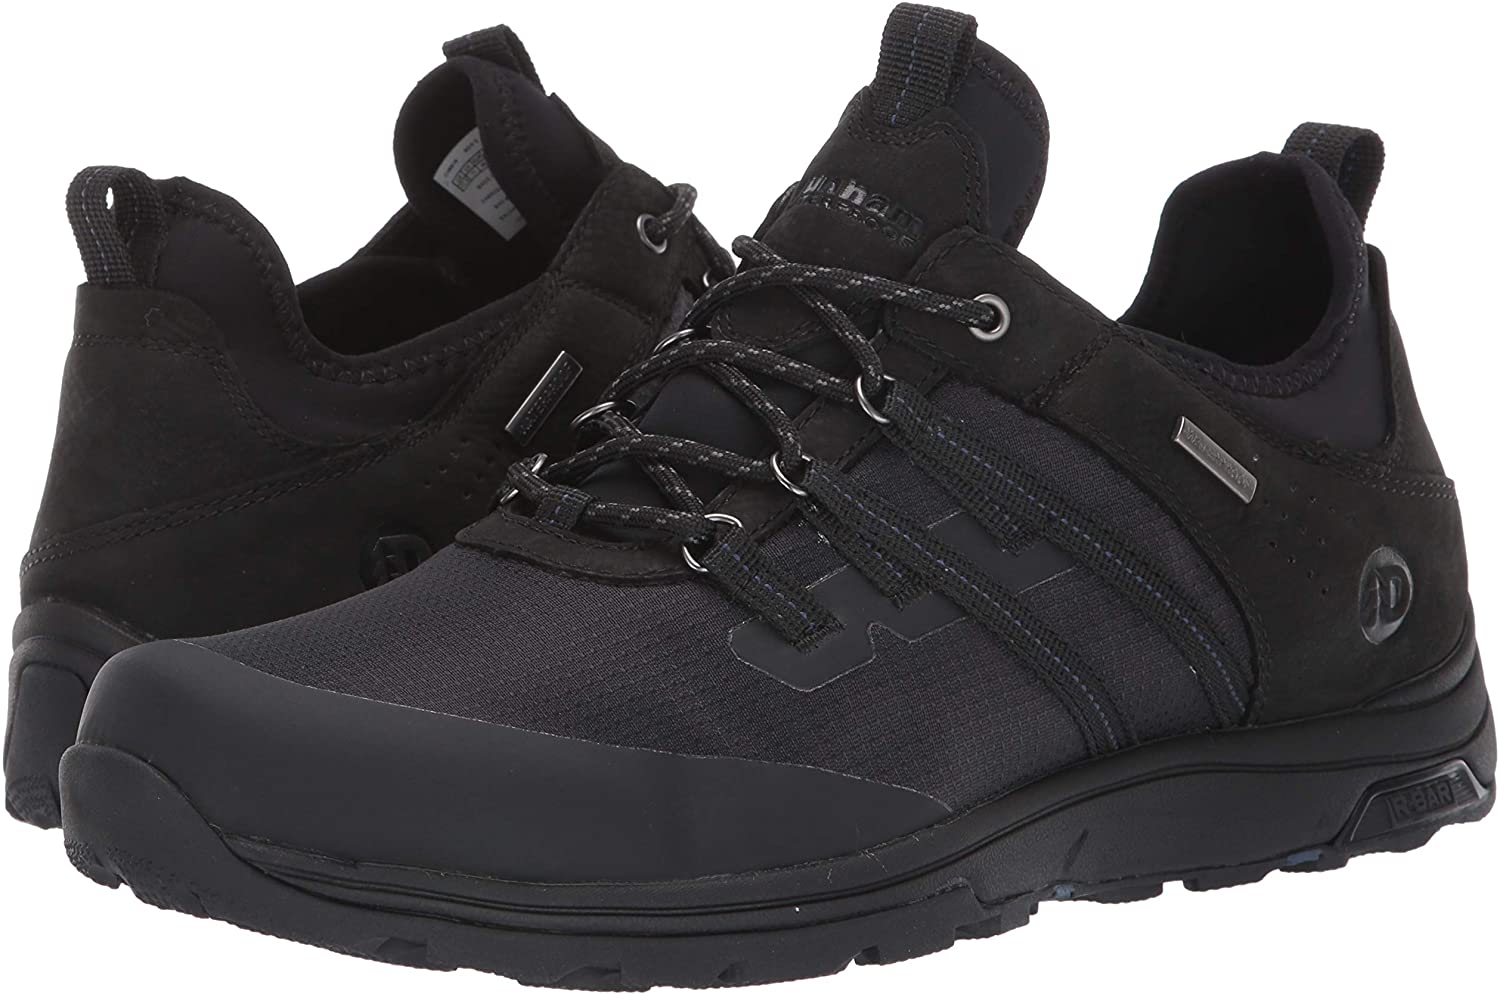 Dunham Men's Cade Sports Sneaker, Black, Size 9.0 mReZ 192743803656 | eBay